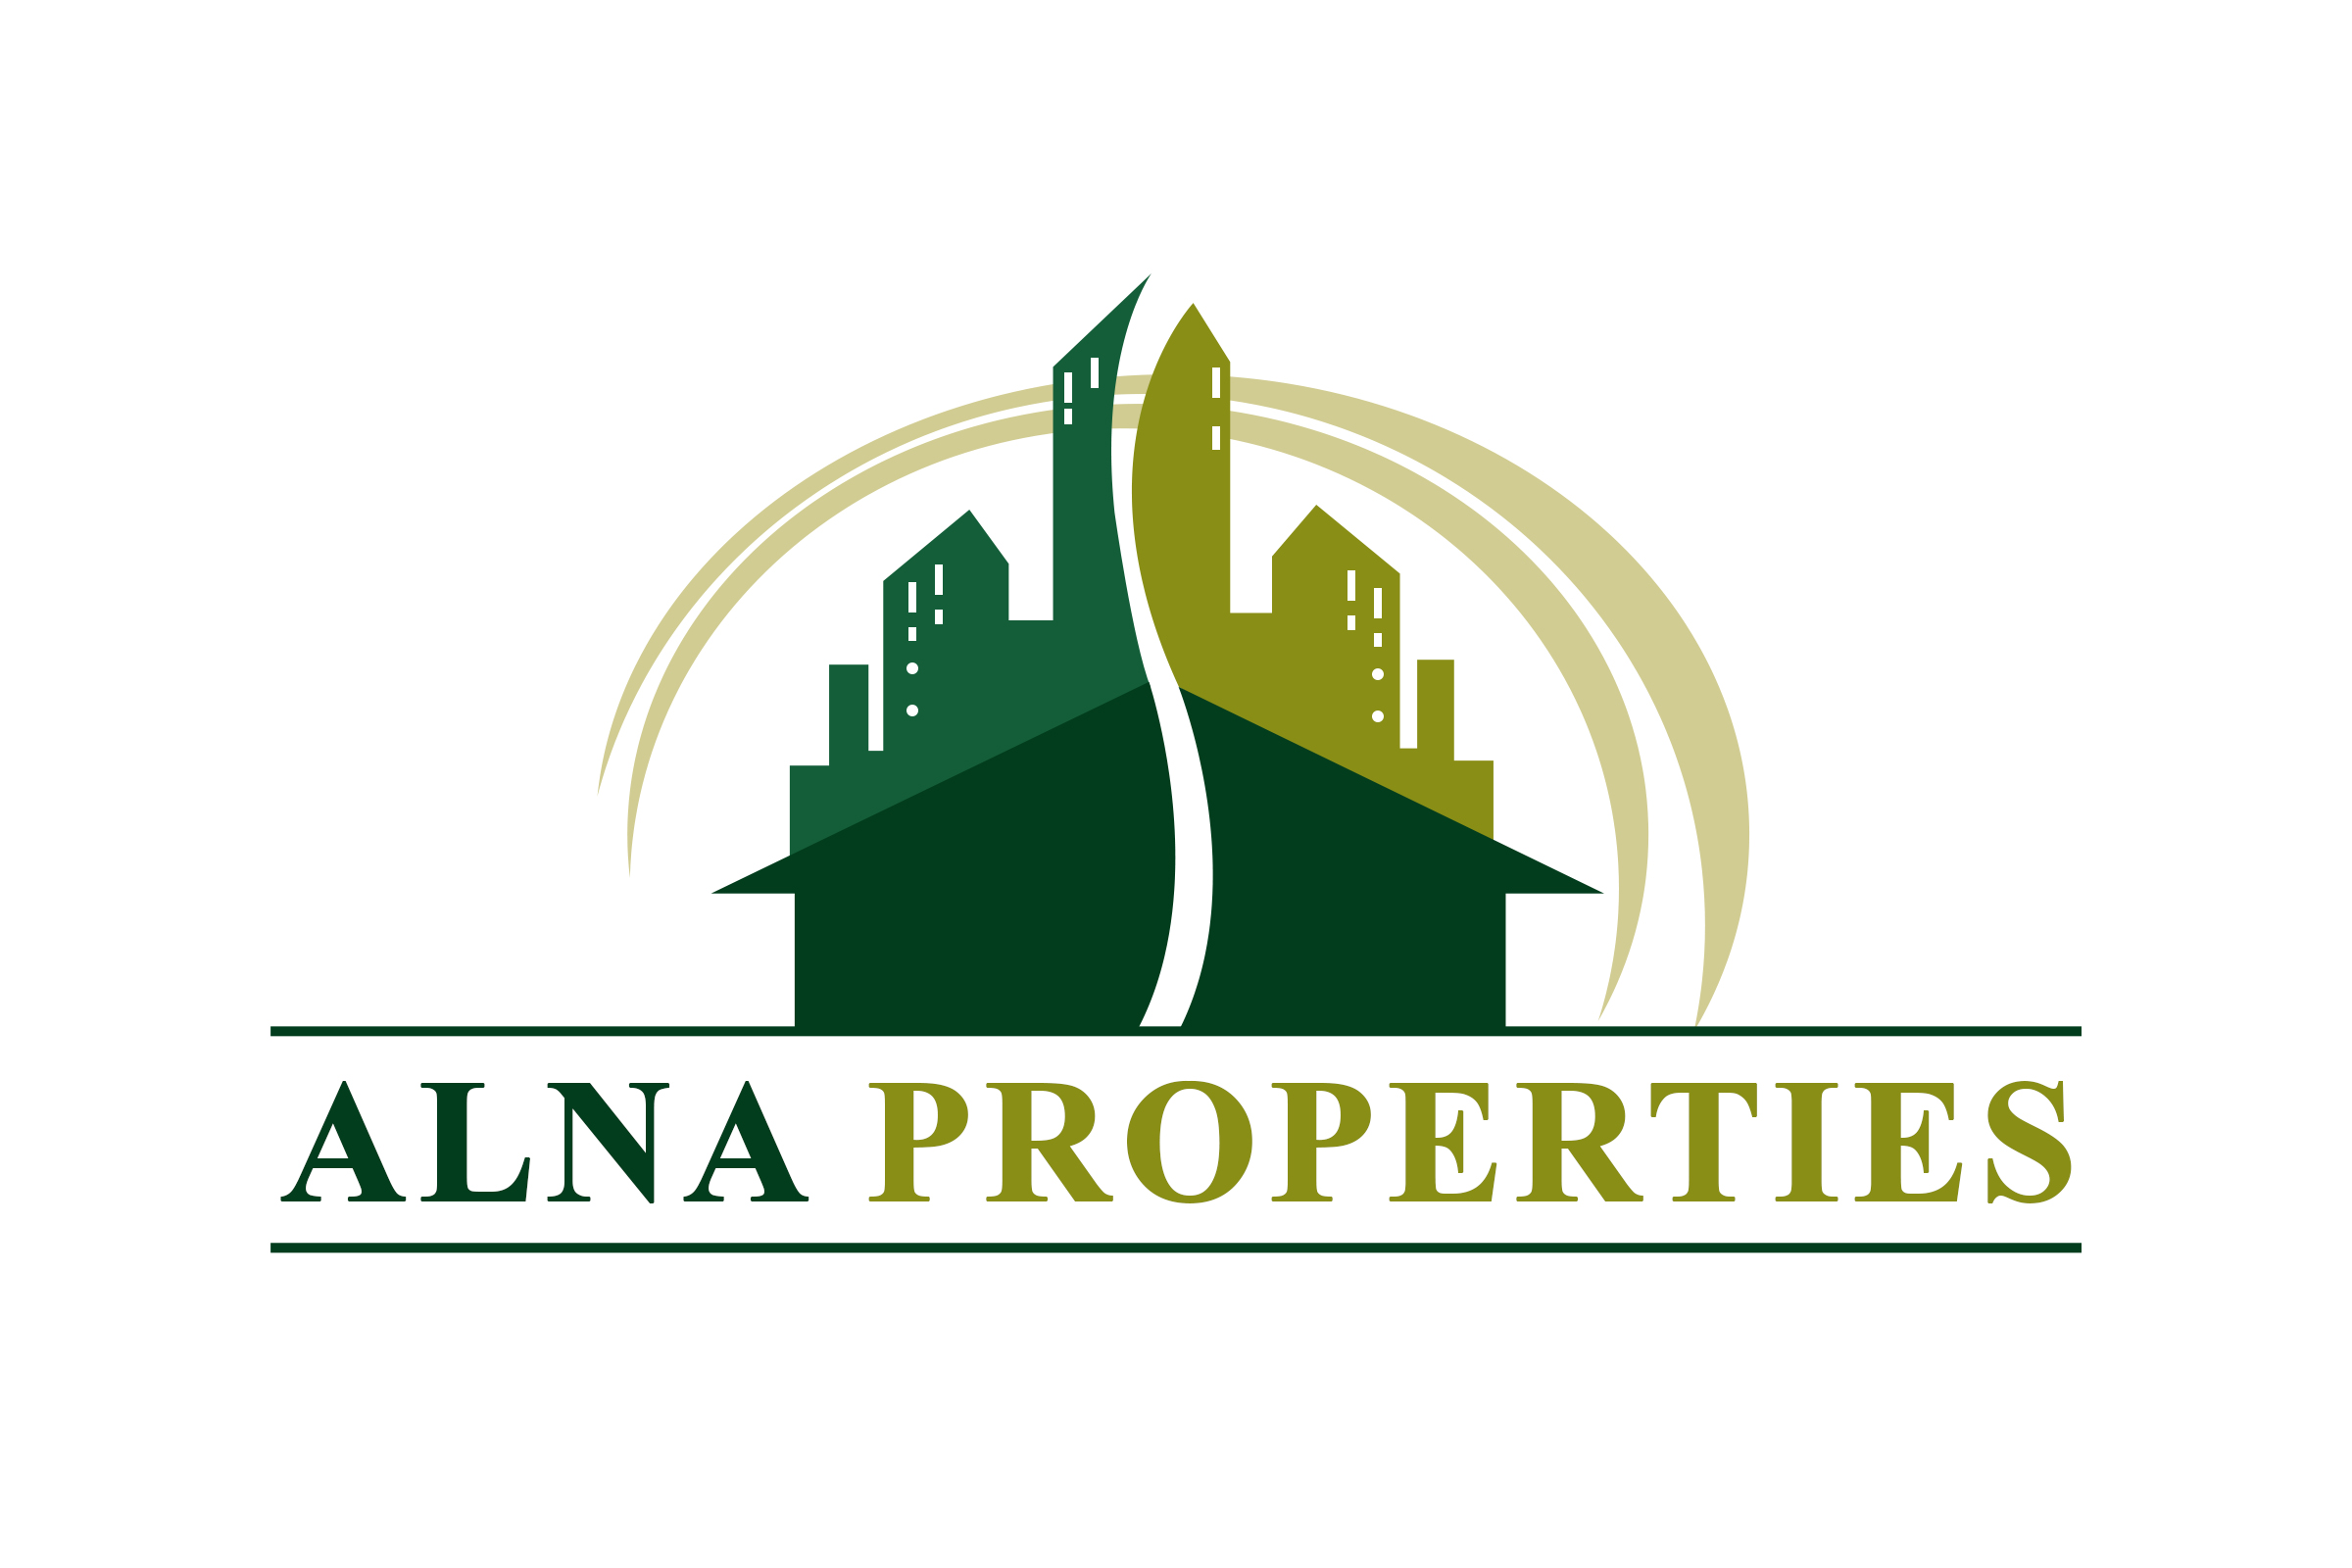 ALNA Properties LOGO